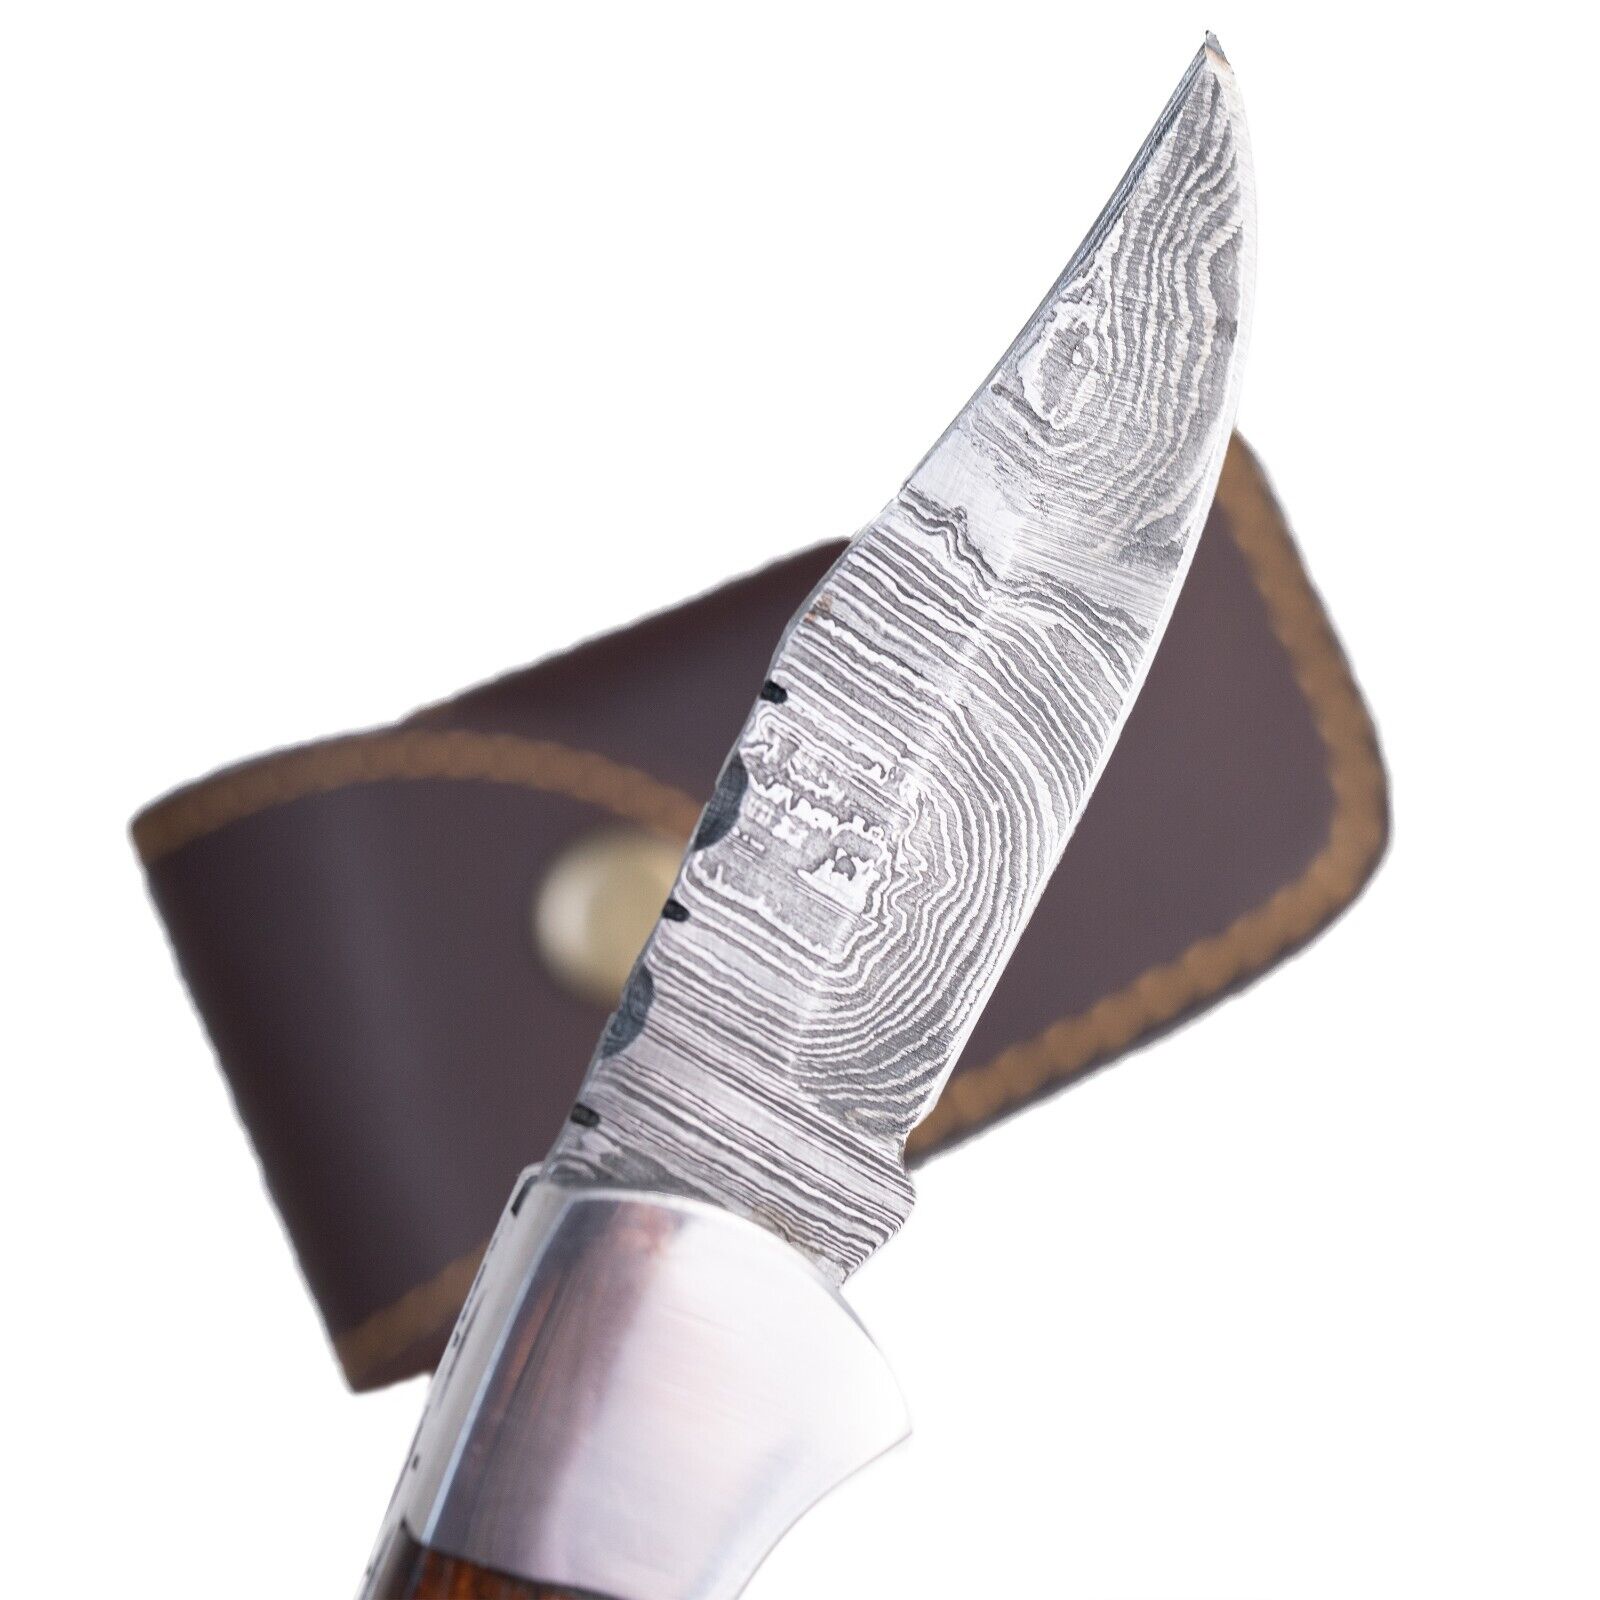 Damascus Steel Pocket Knife Folding Blade 6.5